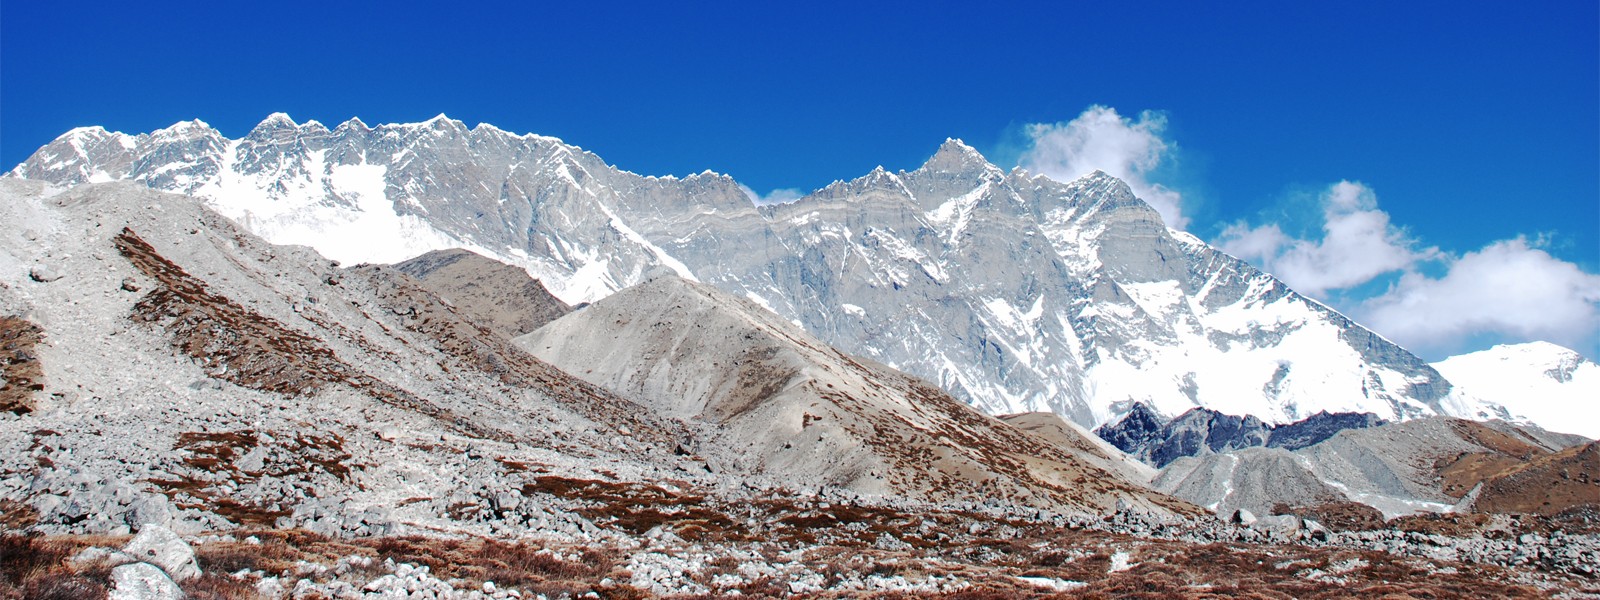 Mount Peak 38 Climbing in Khumbu region